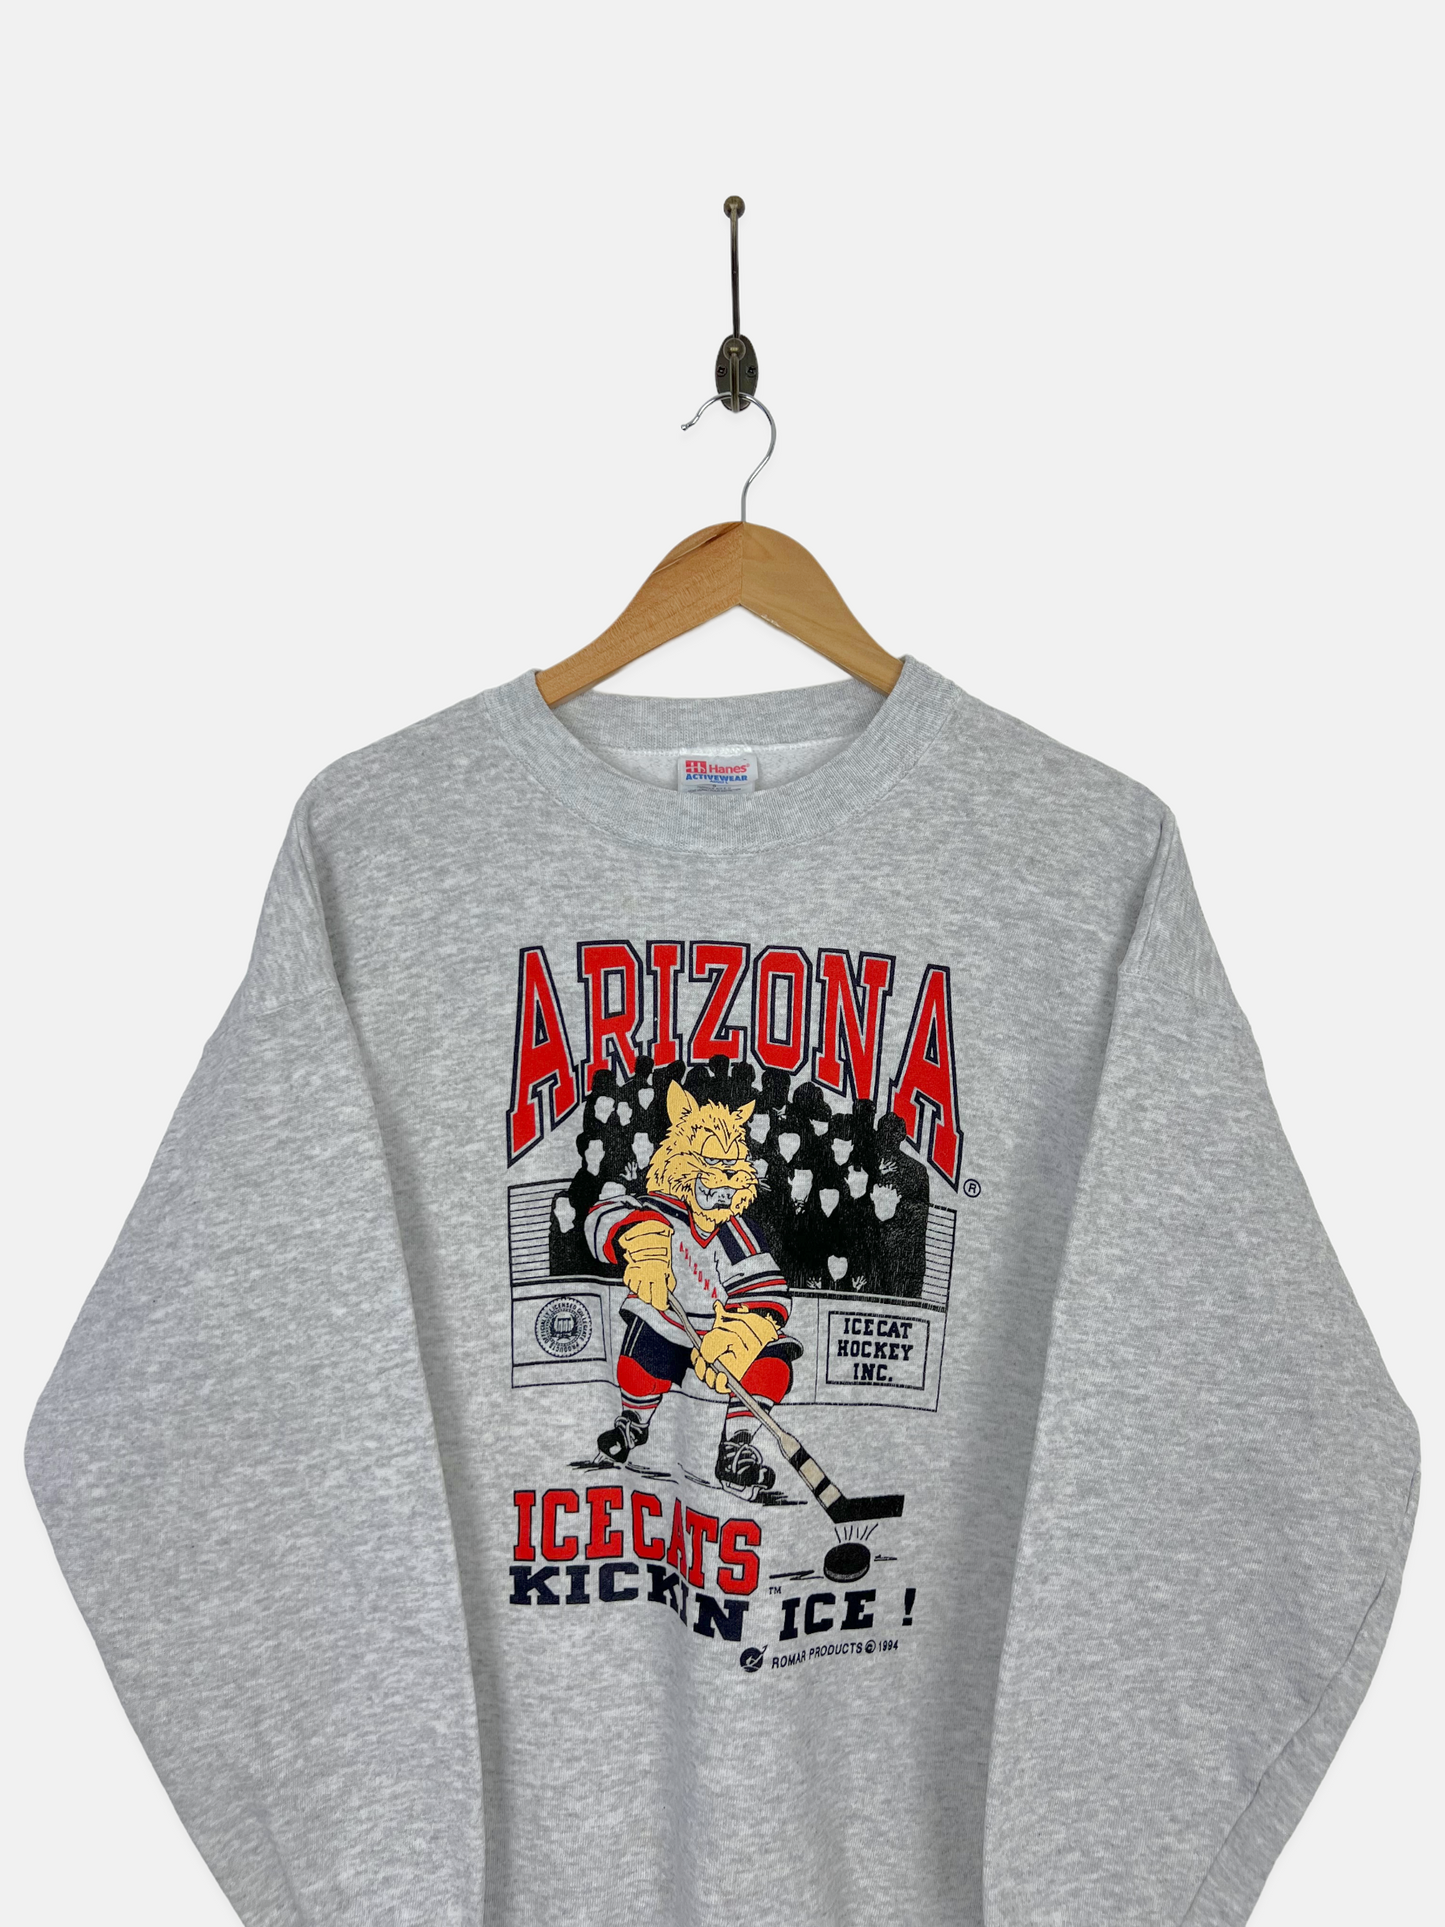 1994 Arizona Wildcats Hockey USA Made Vintage Sweatshirt Size 10